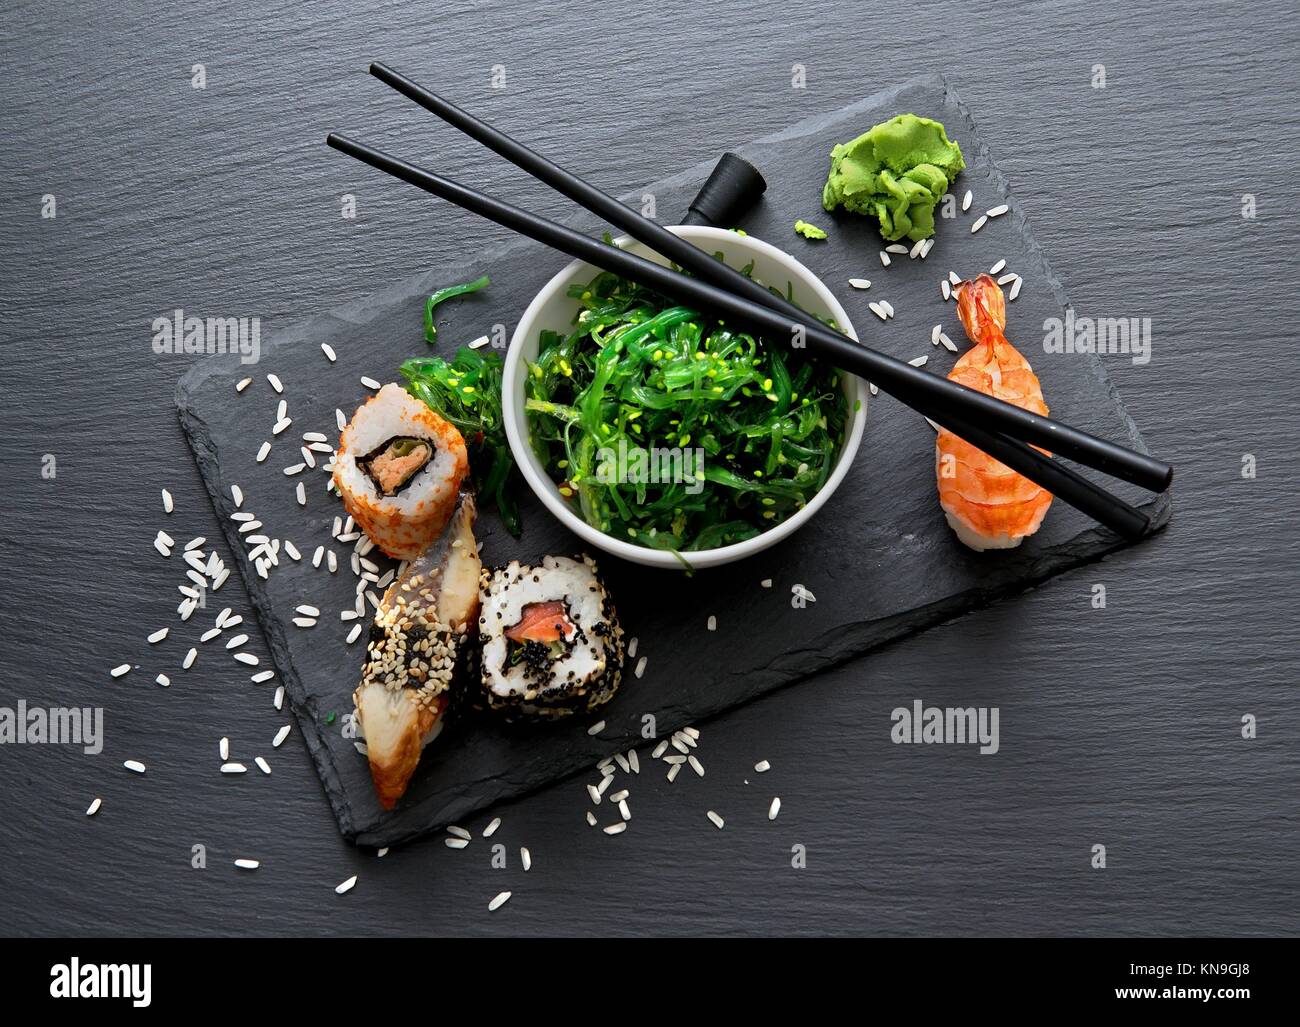 Sushi and seaweed salad on slate table. Stock Photo